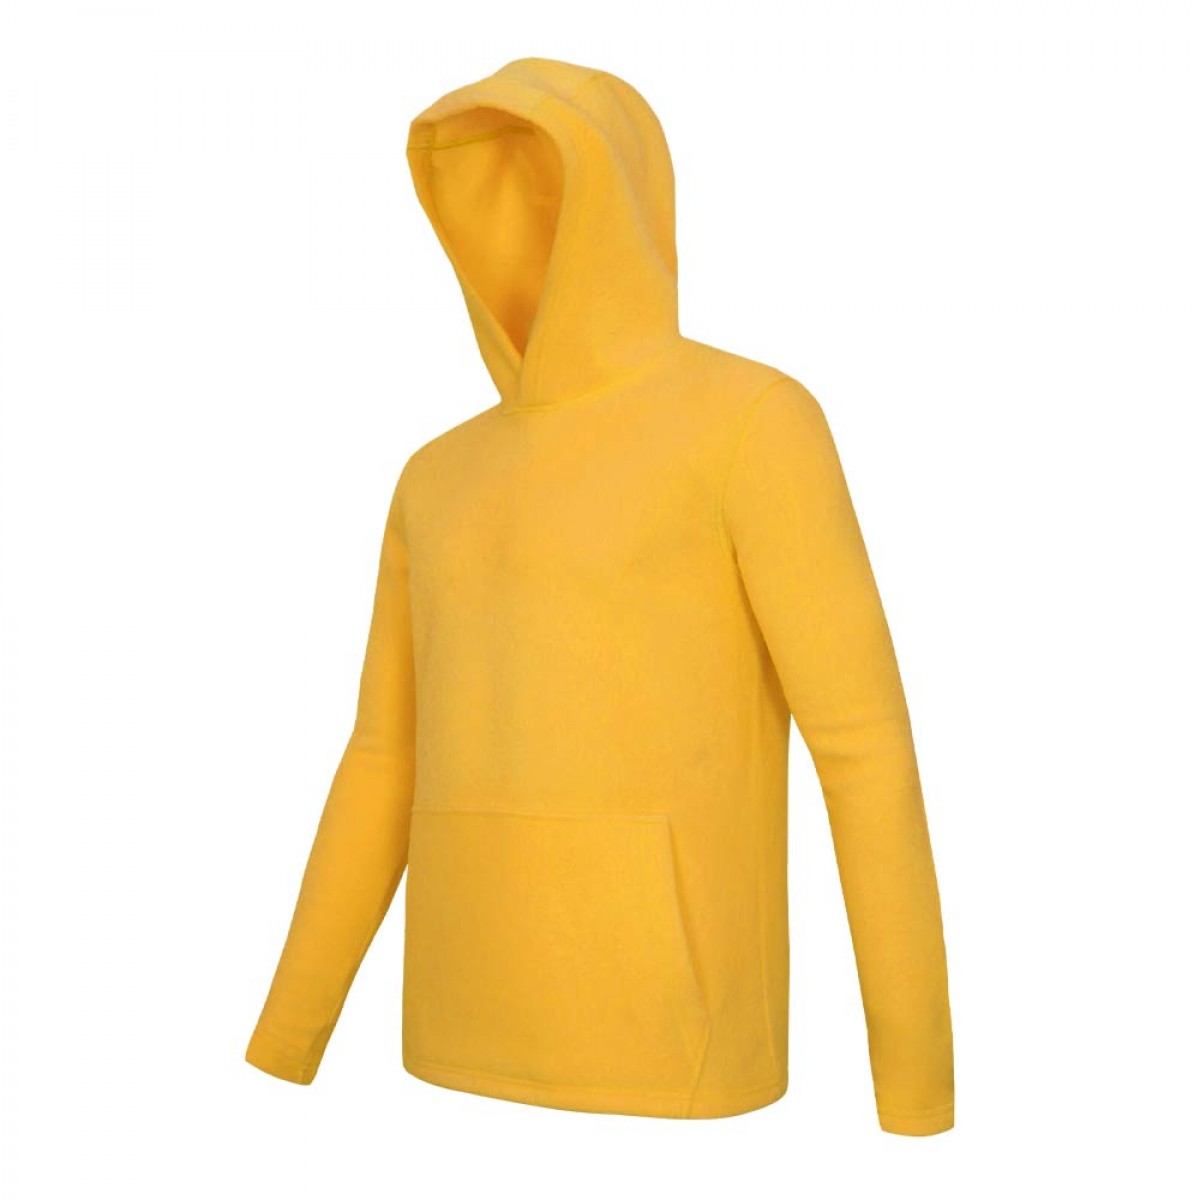 mens-fleece-hoodie-jacket-kfhj15104-1a